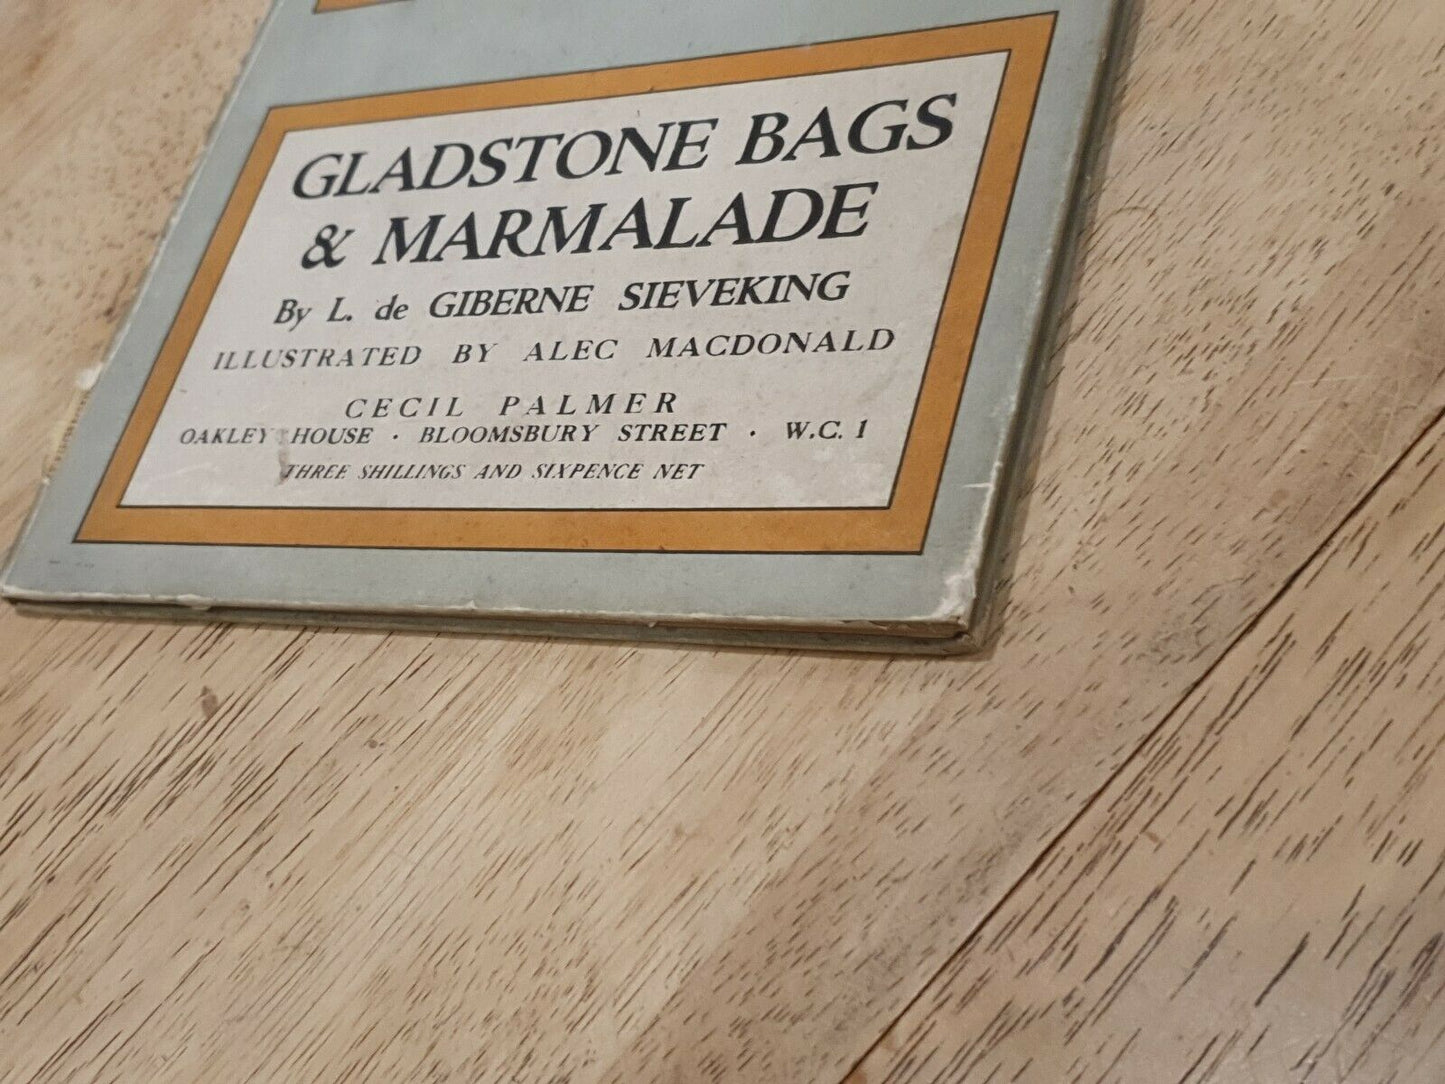 Gladstone Bags & Marmalade by L de Giberne Sieveking